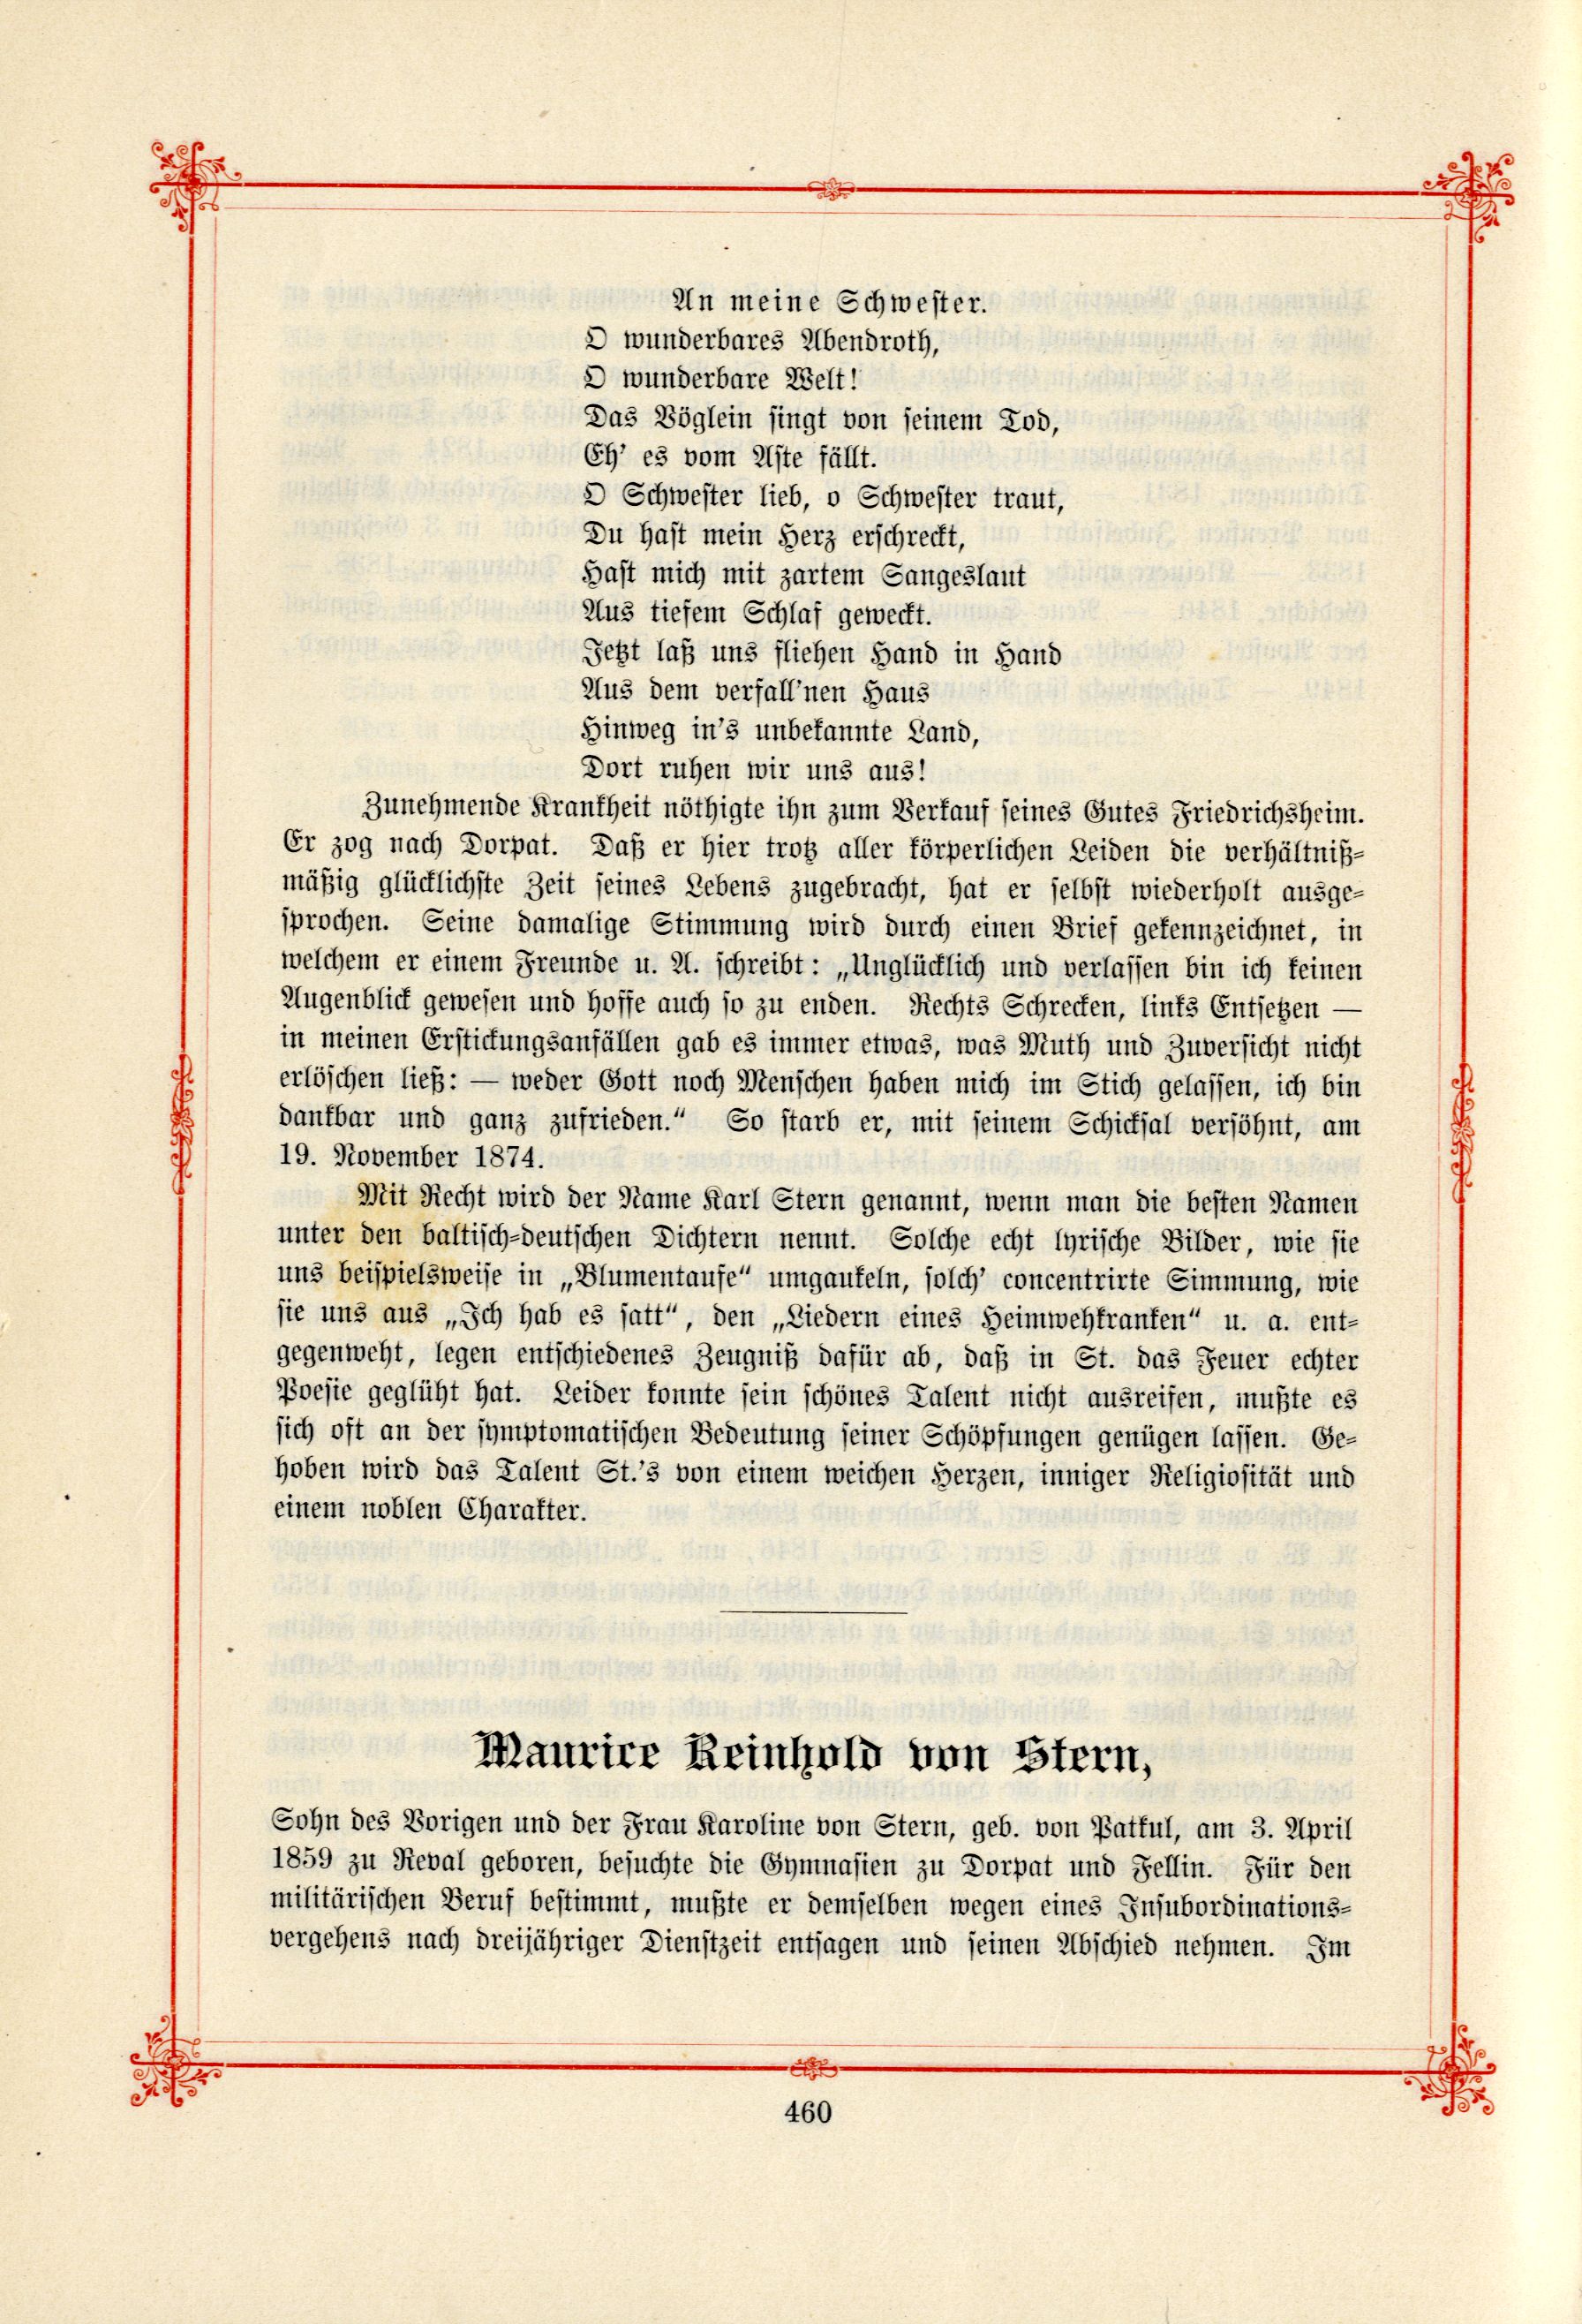 Das Baltische Dichterbuch (1895) | 506. (460) Основной текст